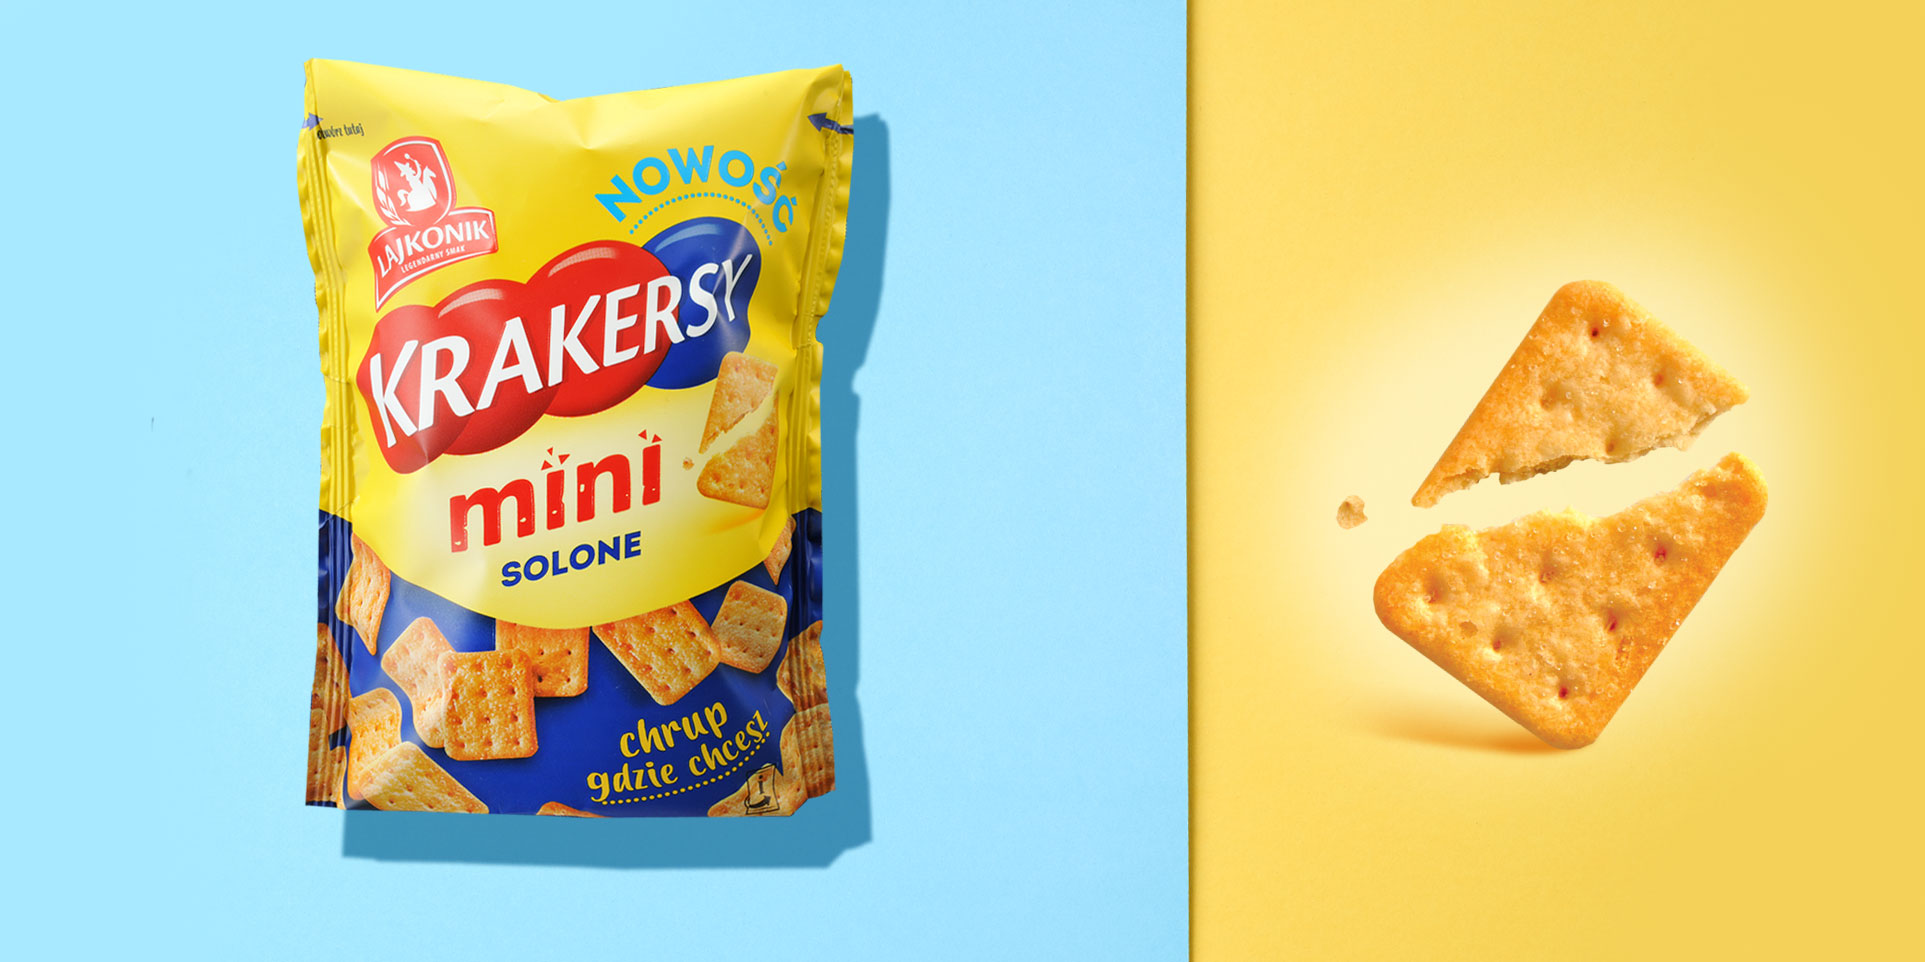 Lajkonik Mini-Crackers packaging design - salty product and a broken cracker.